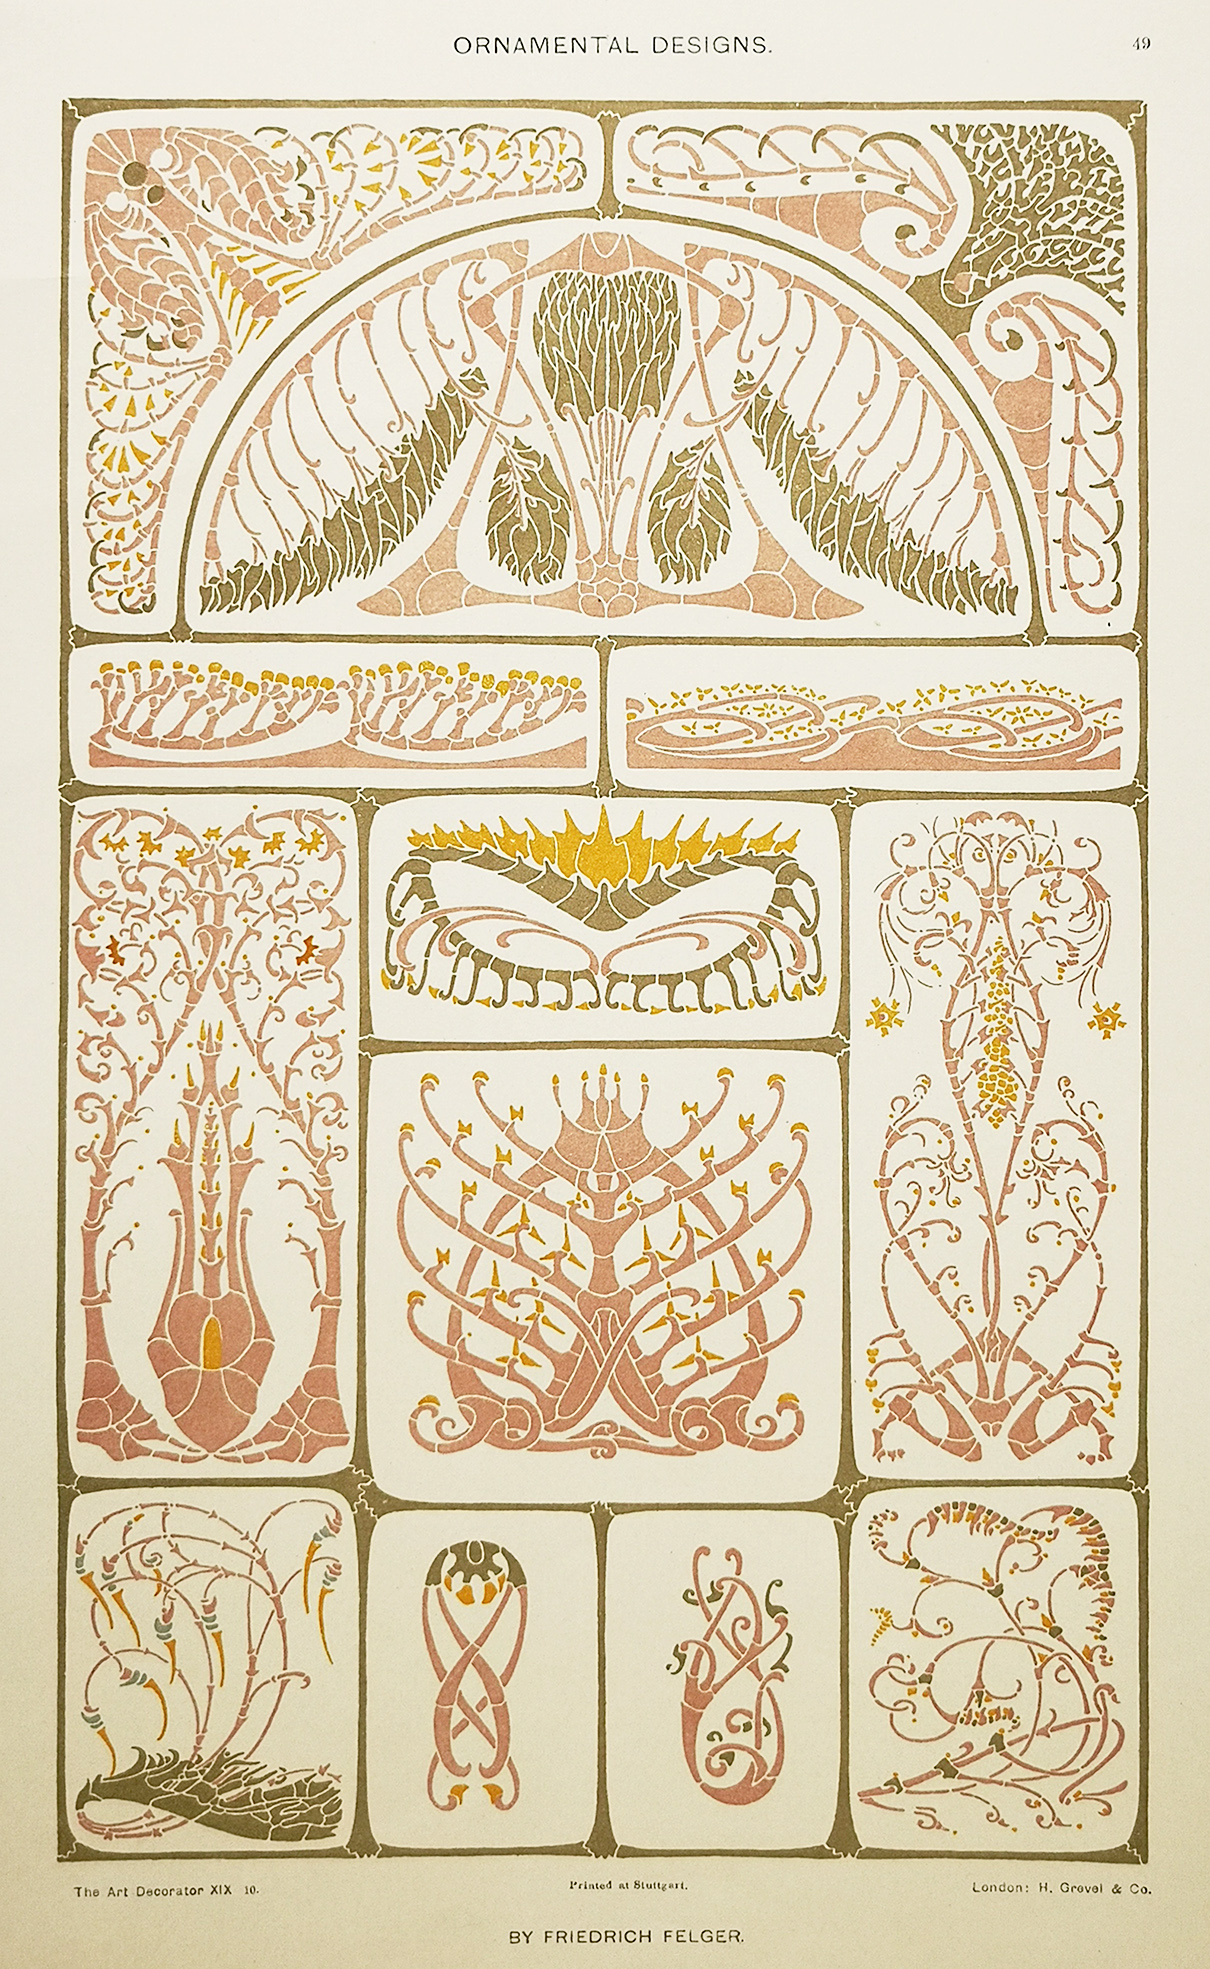 ornamental-designs-friedrich-felger - Antique Print from 1880